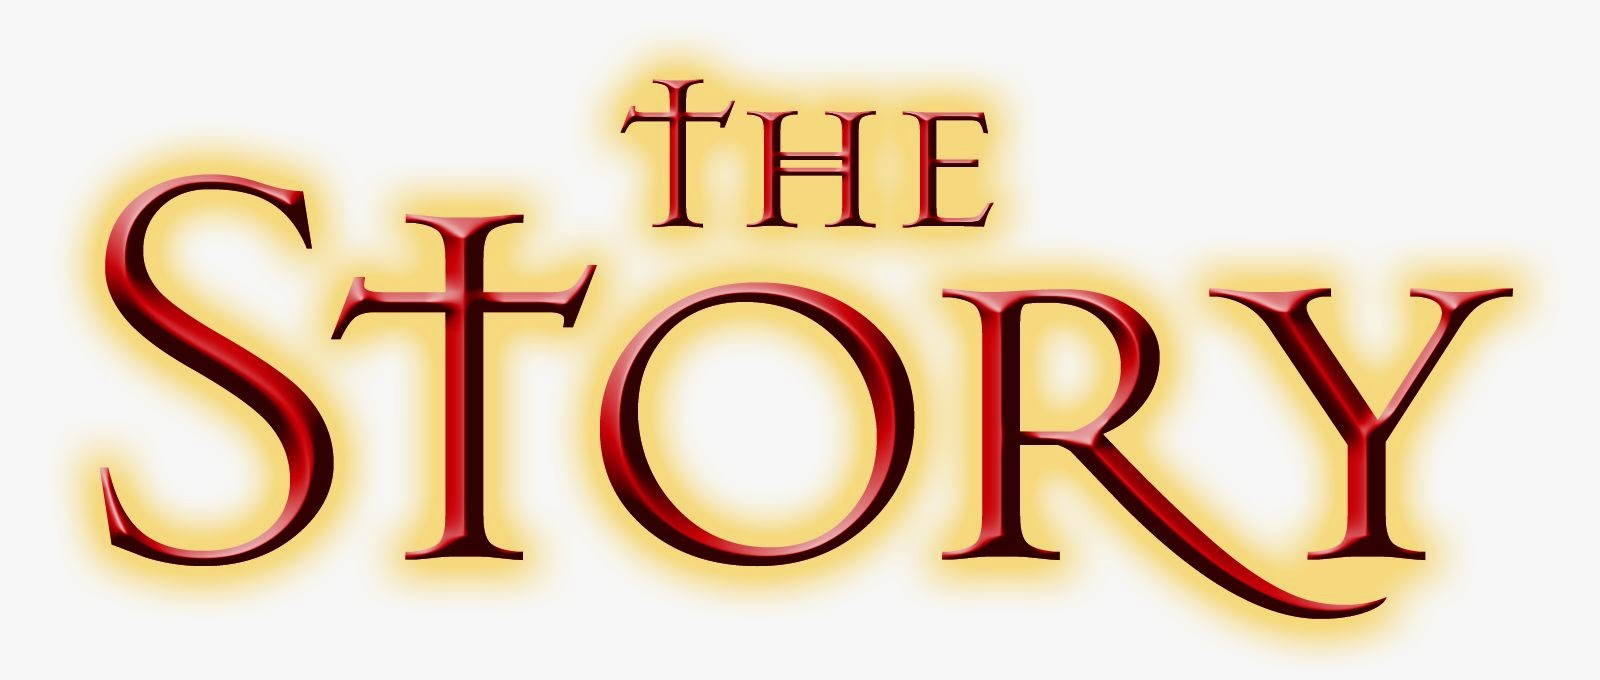 Про story. Story. Story logo. I story логотип. Short History логотип.